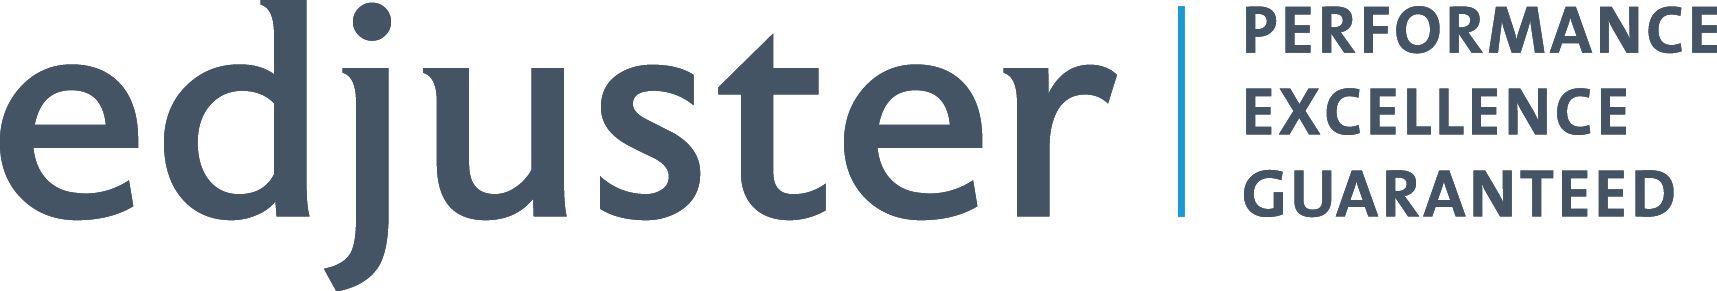 edjuster logo.jpg